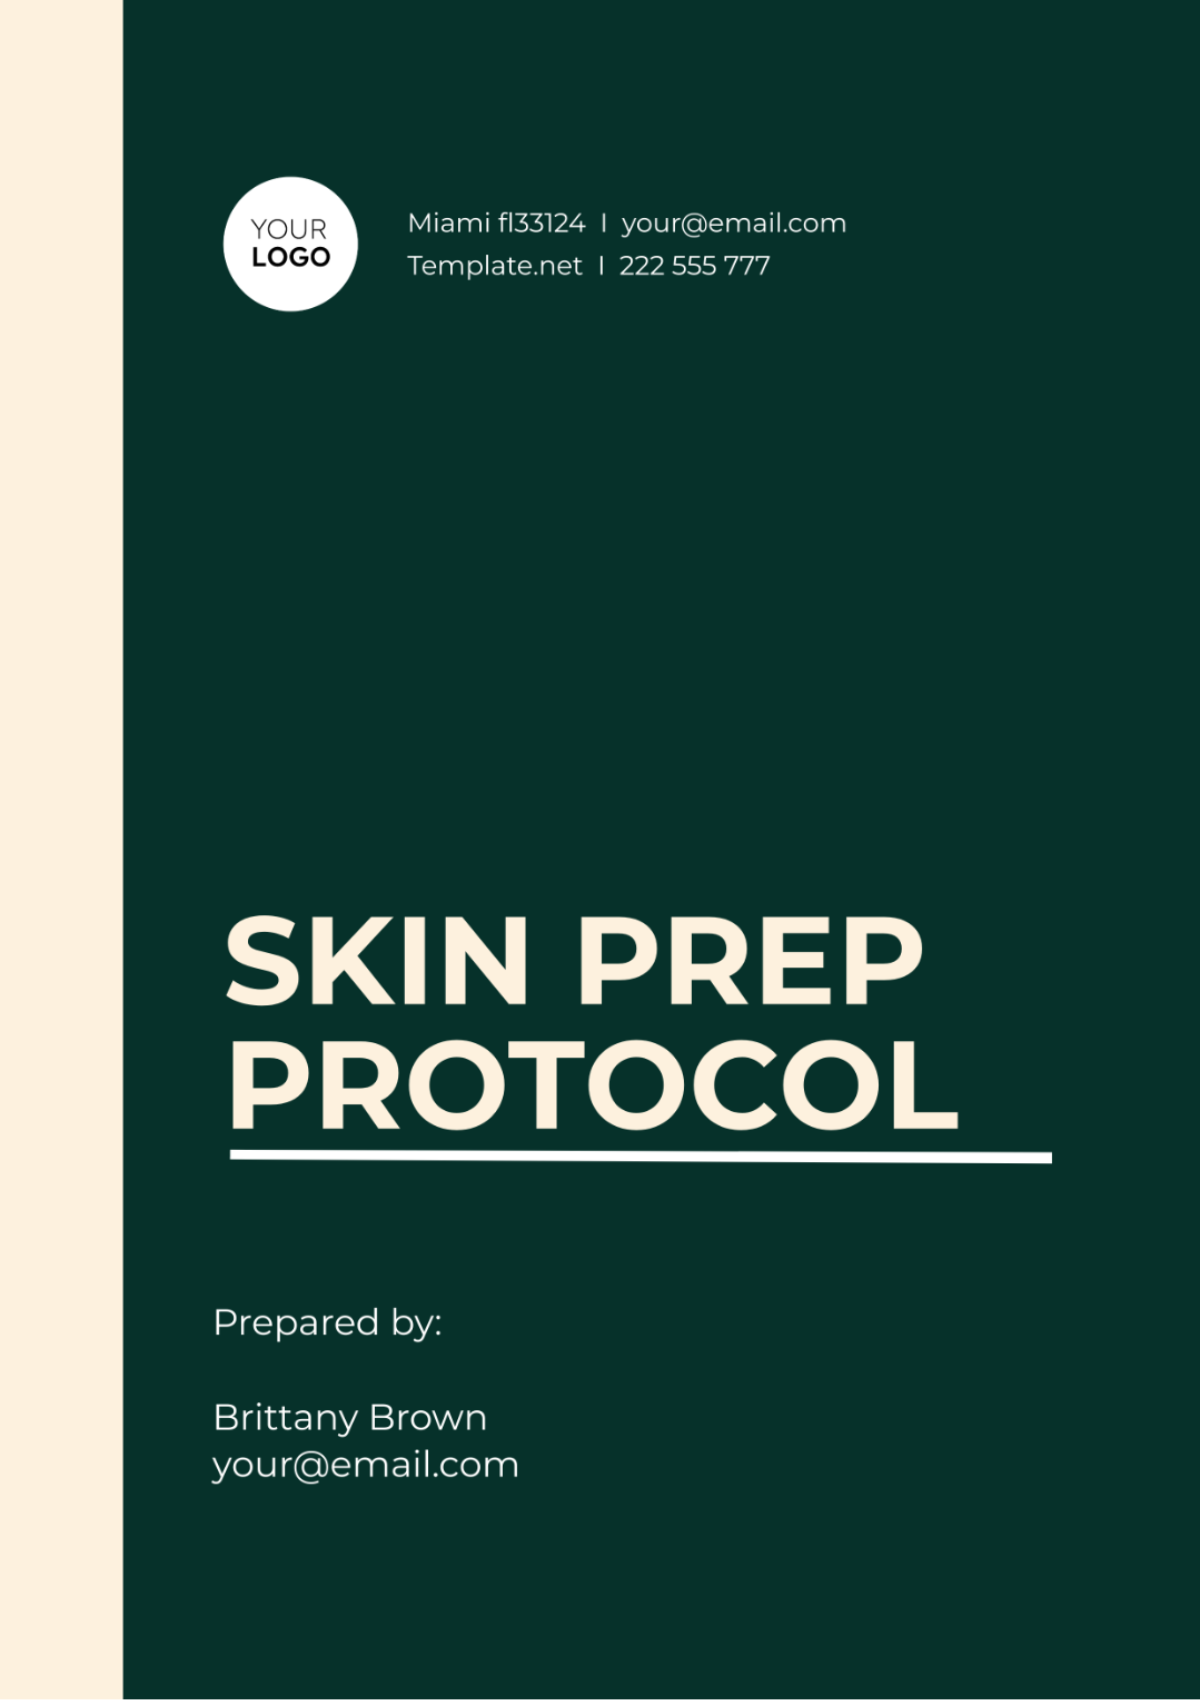 Free Skin Prep Protocol Template